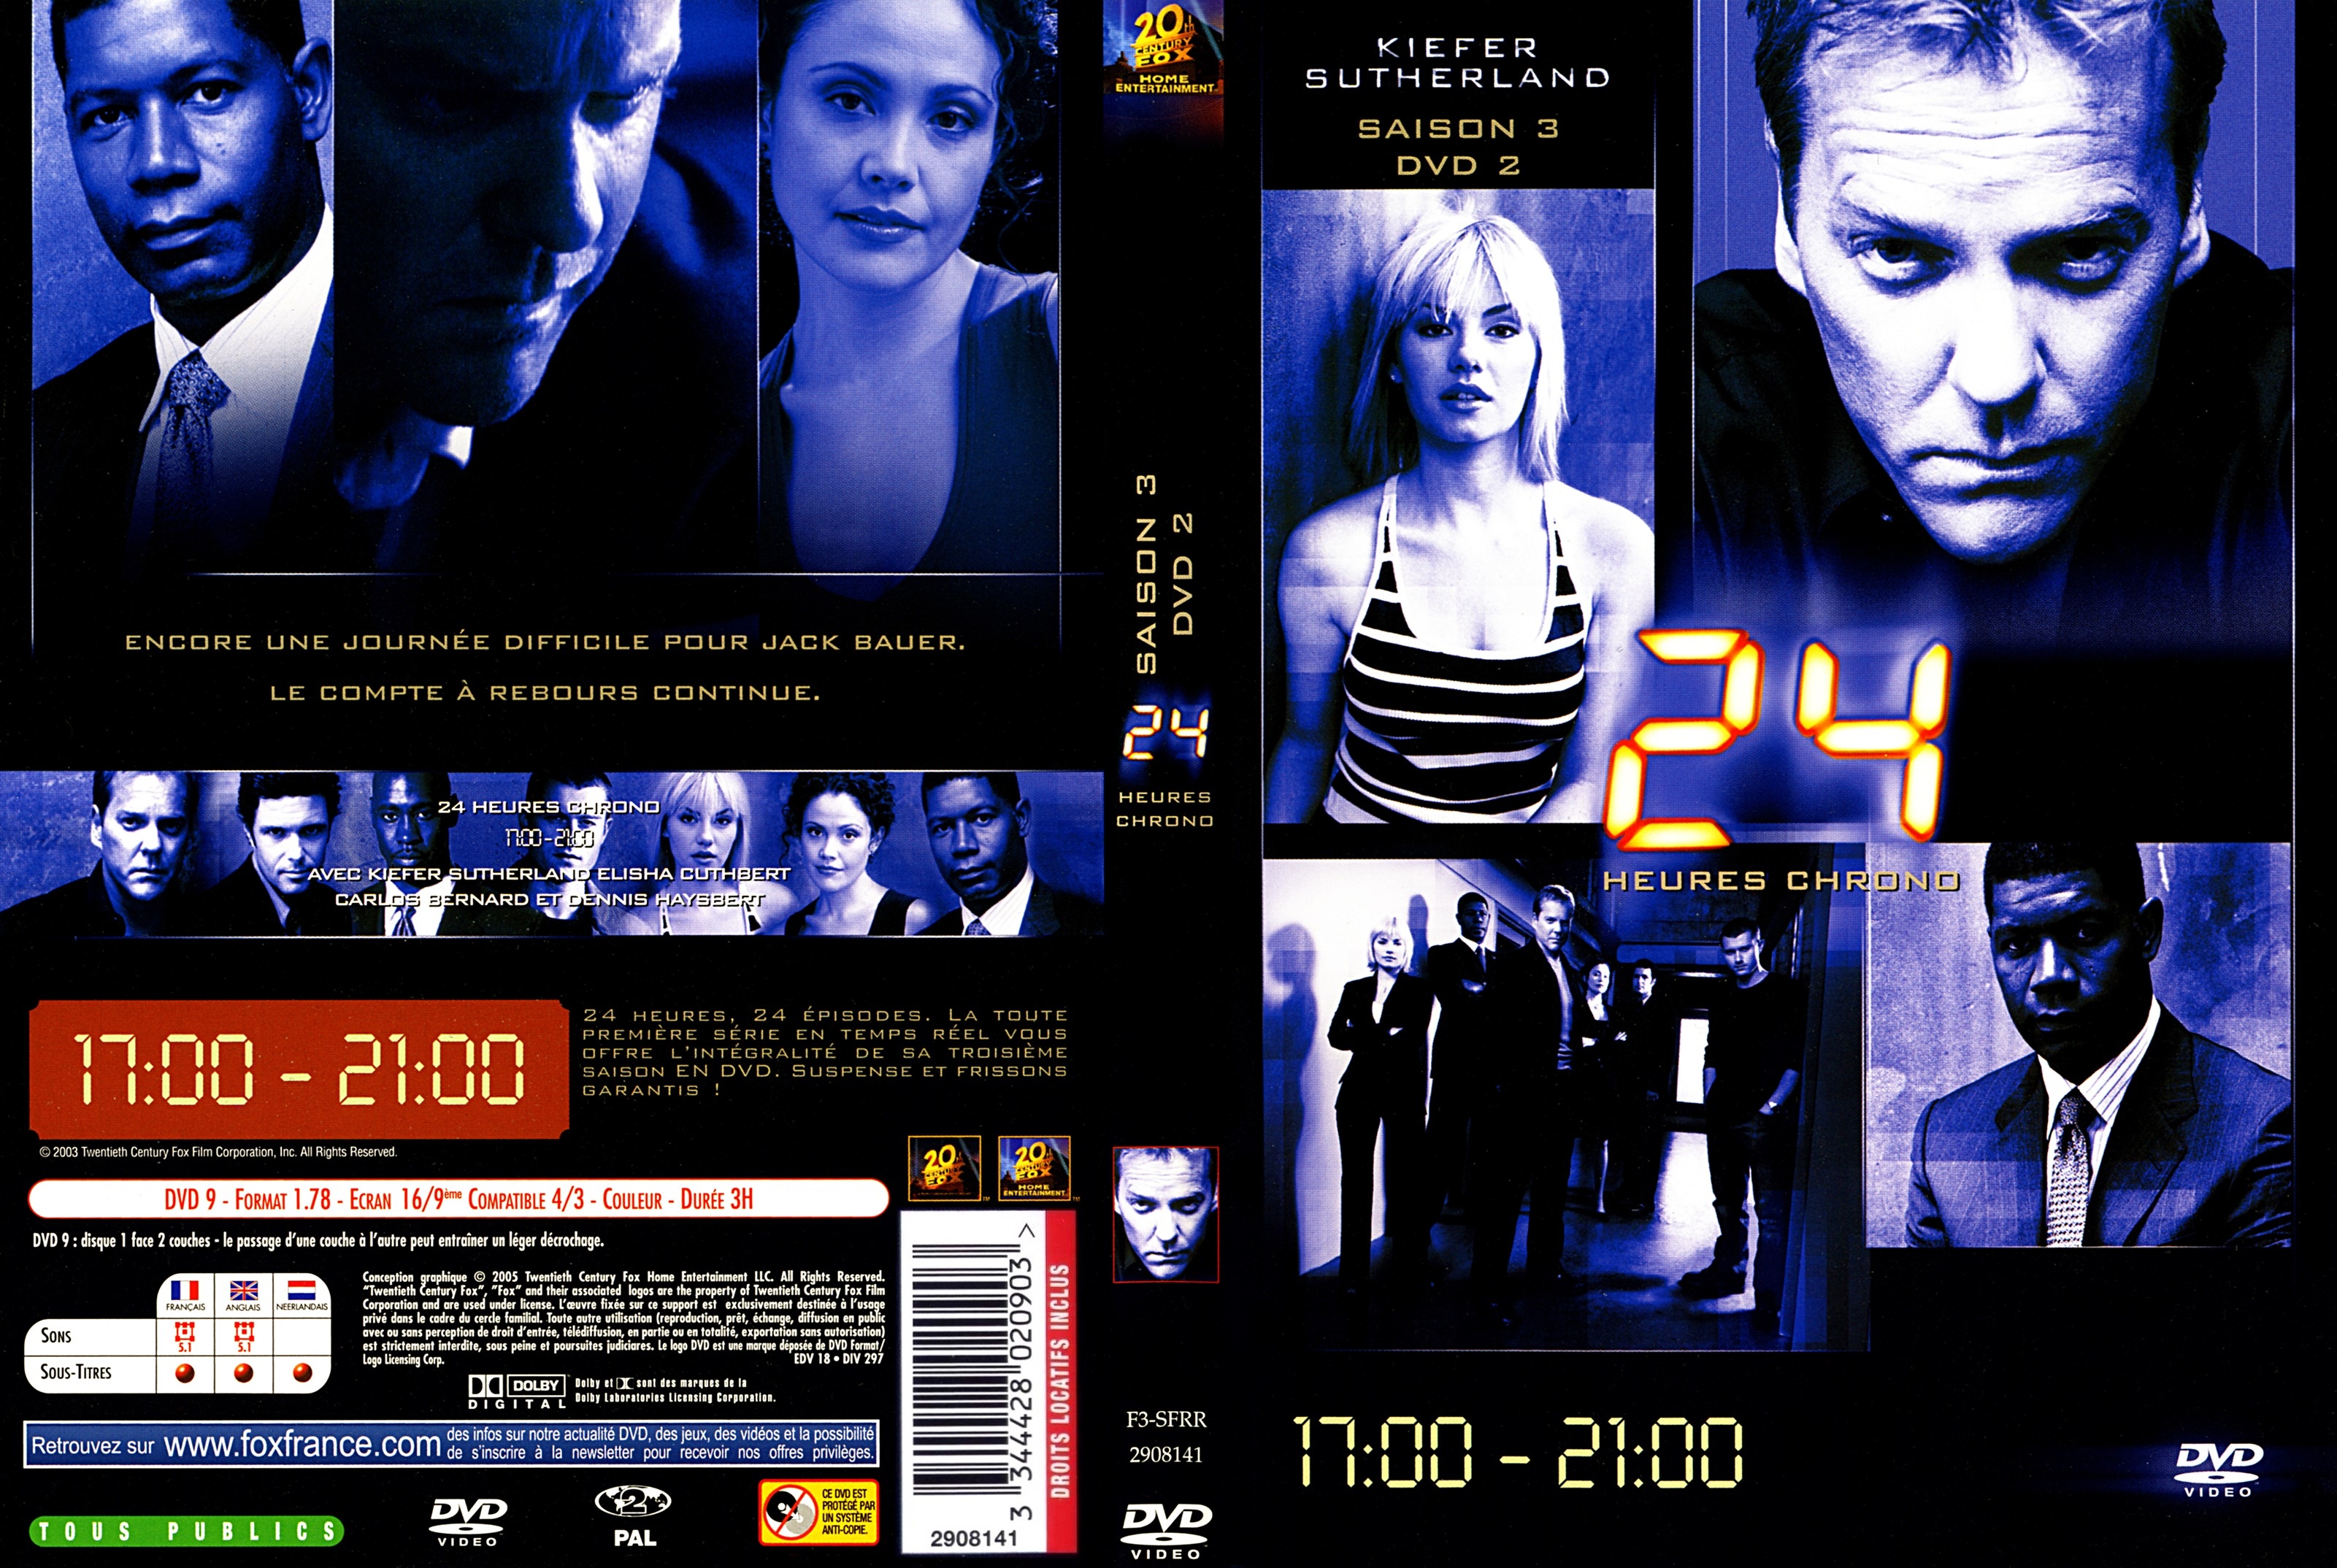 Jaquette DVD 24 heures chrono saison 3 DVD 2